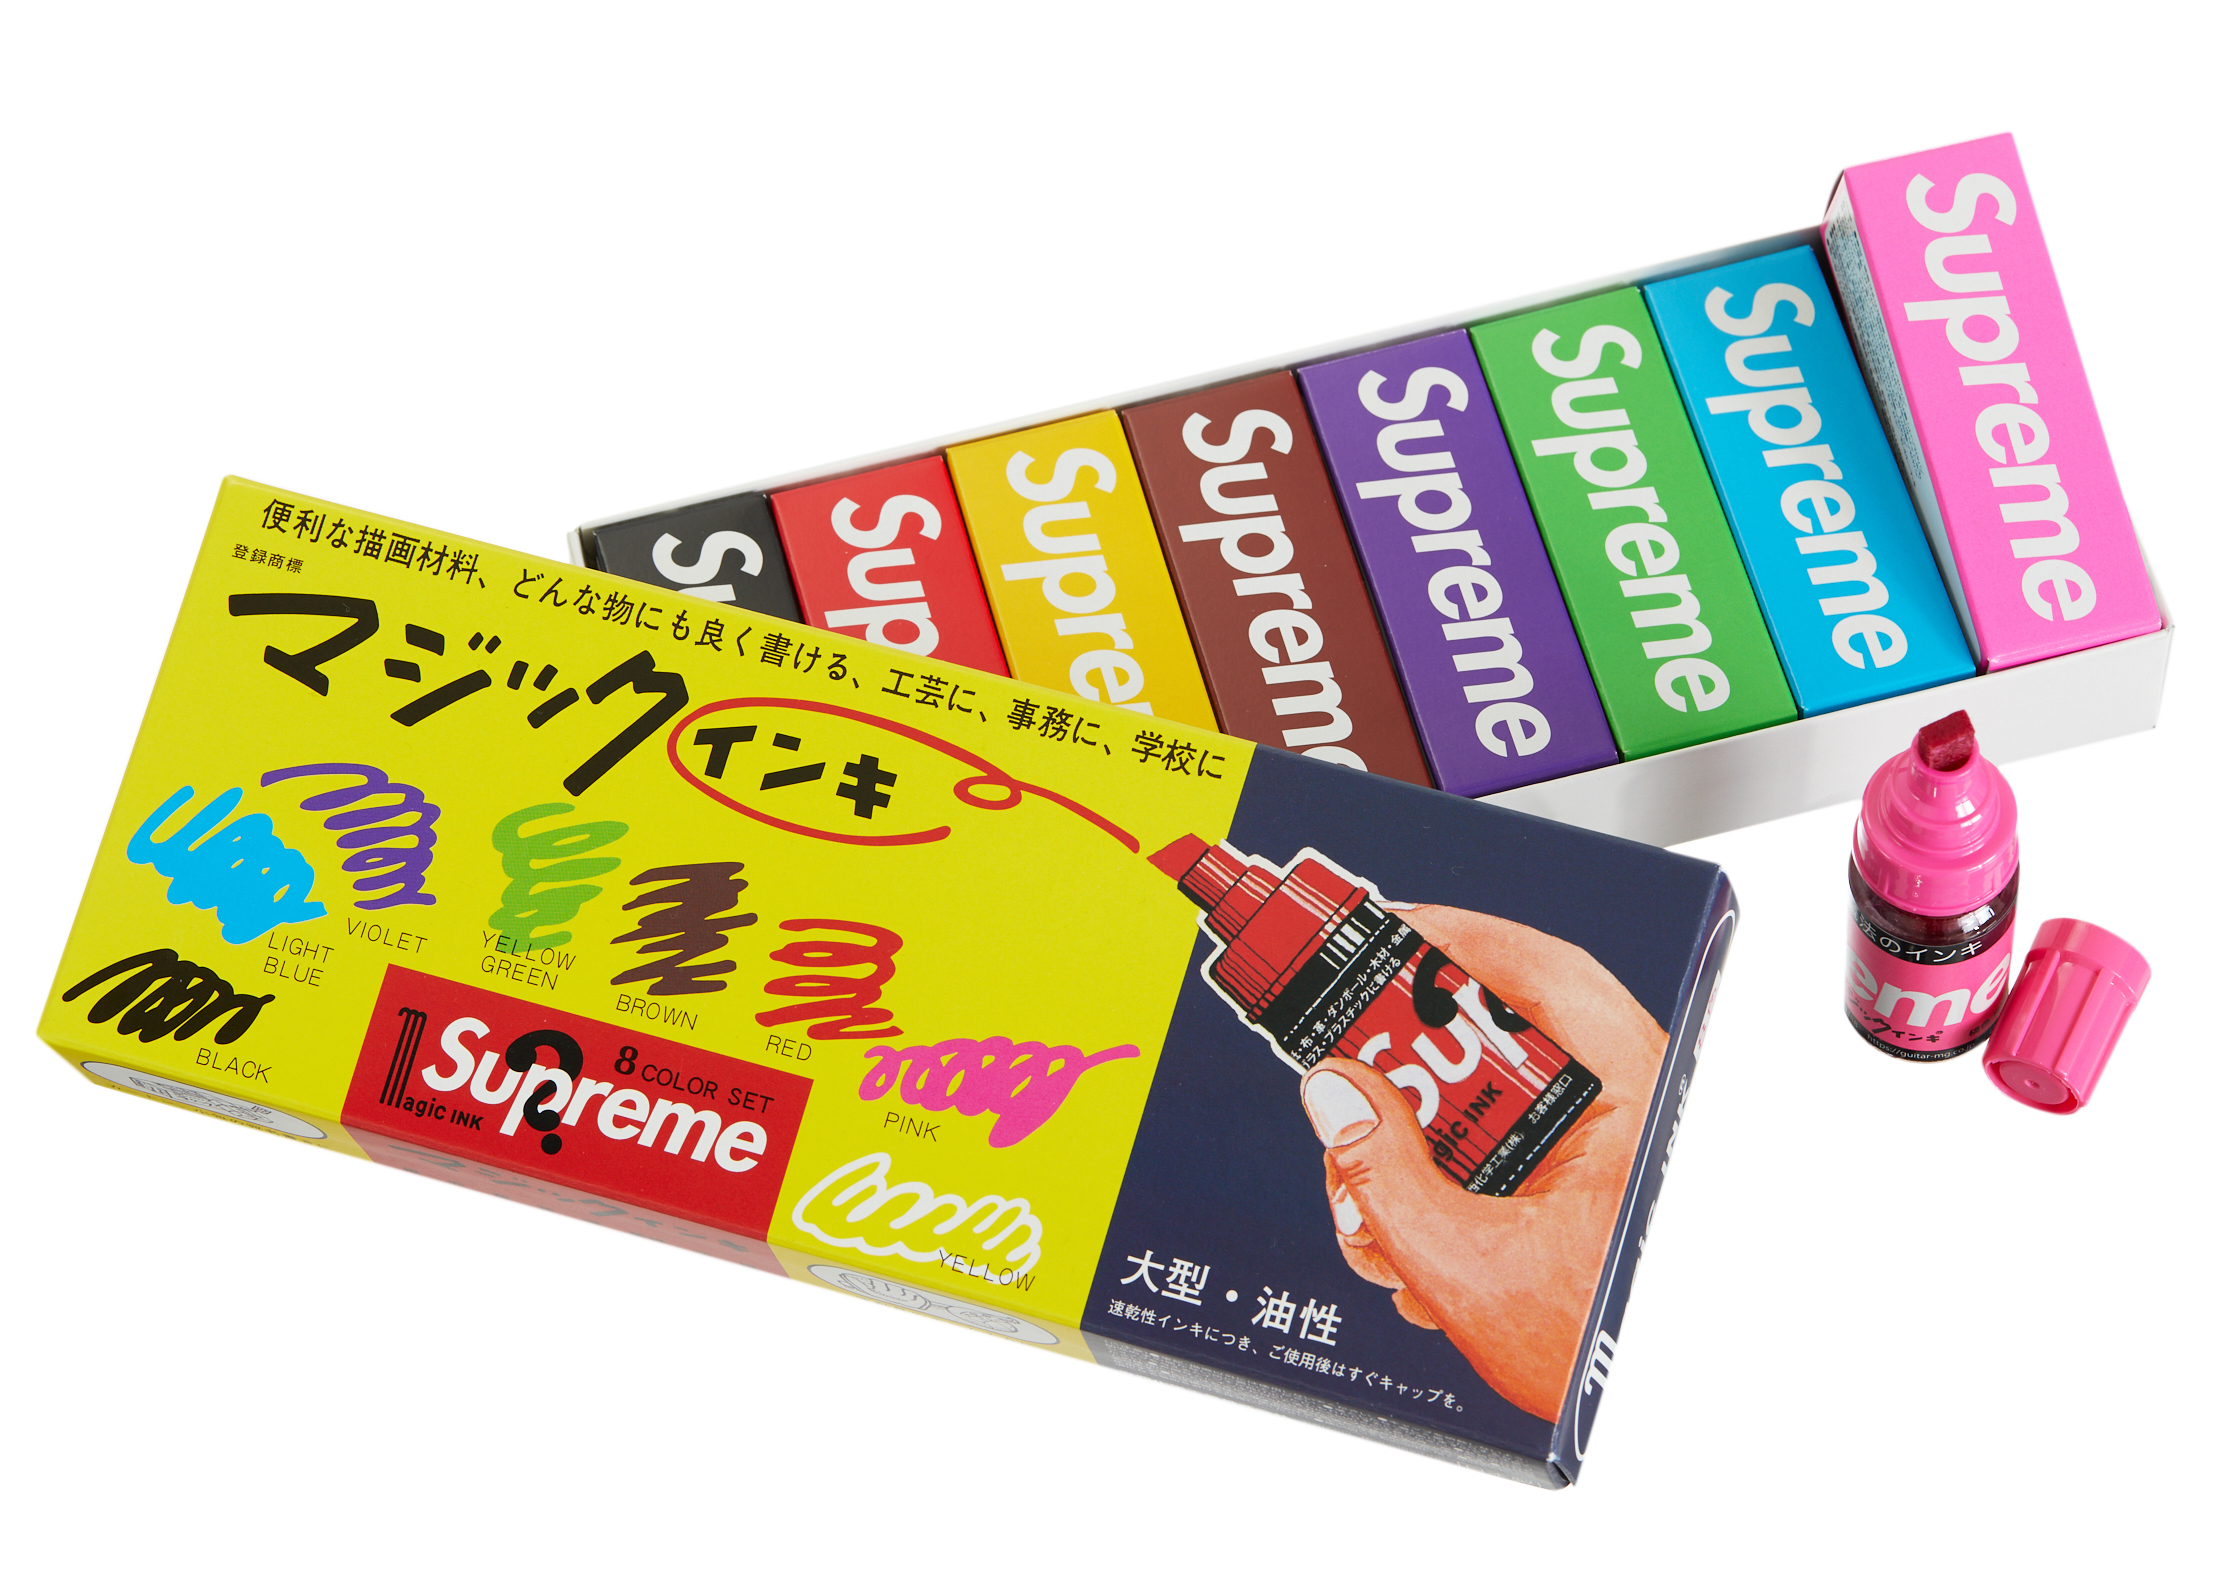 Supreme Magic Ink Markers (Set of 8) Multicolor